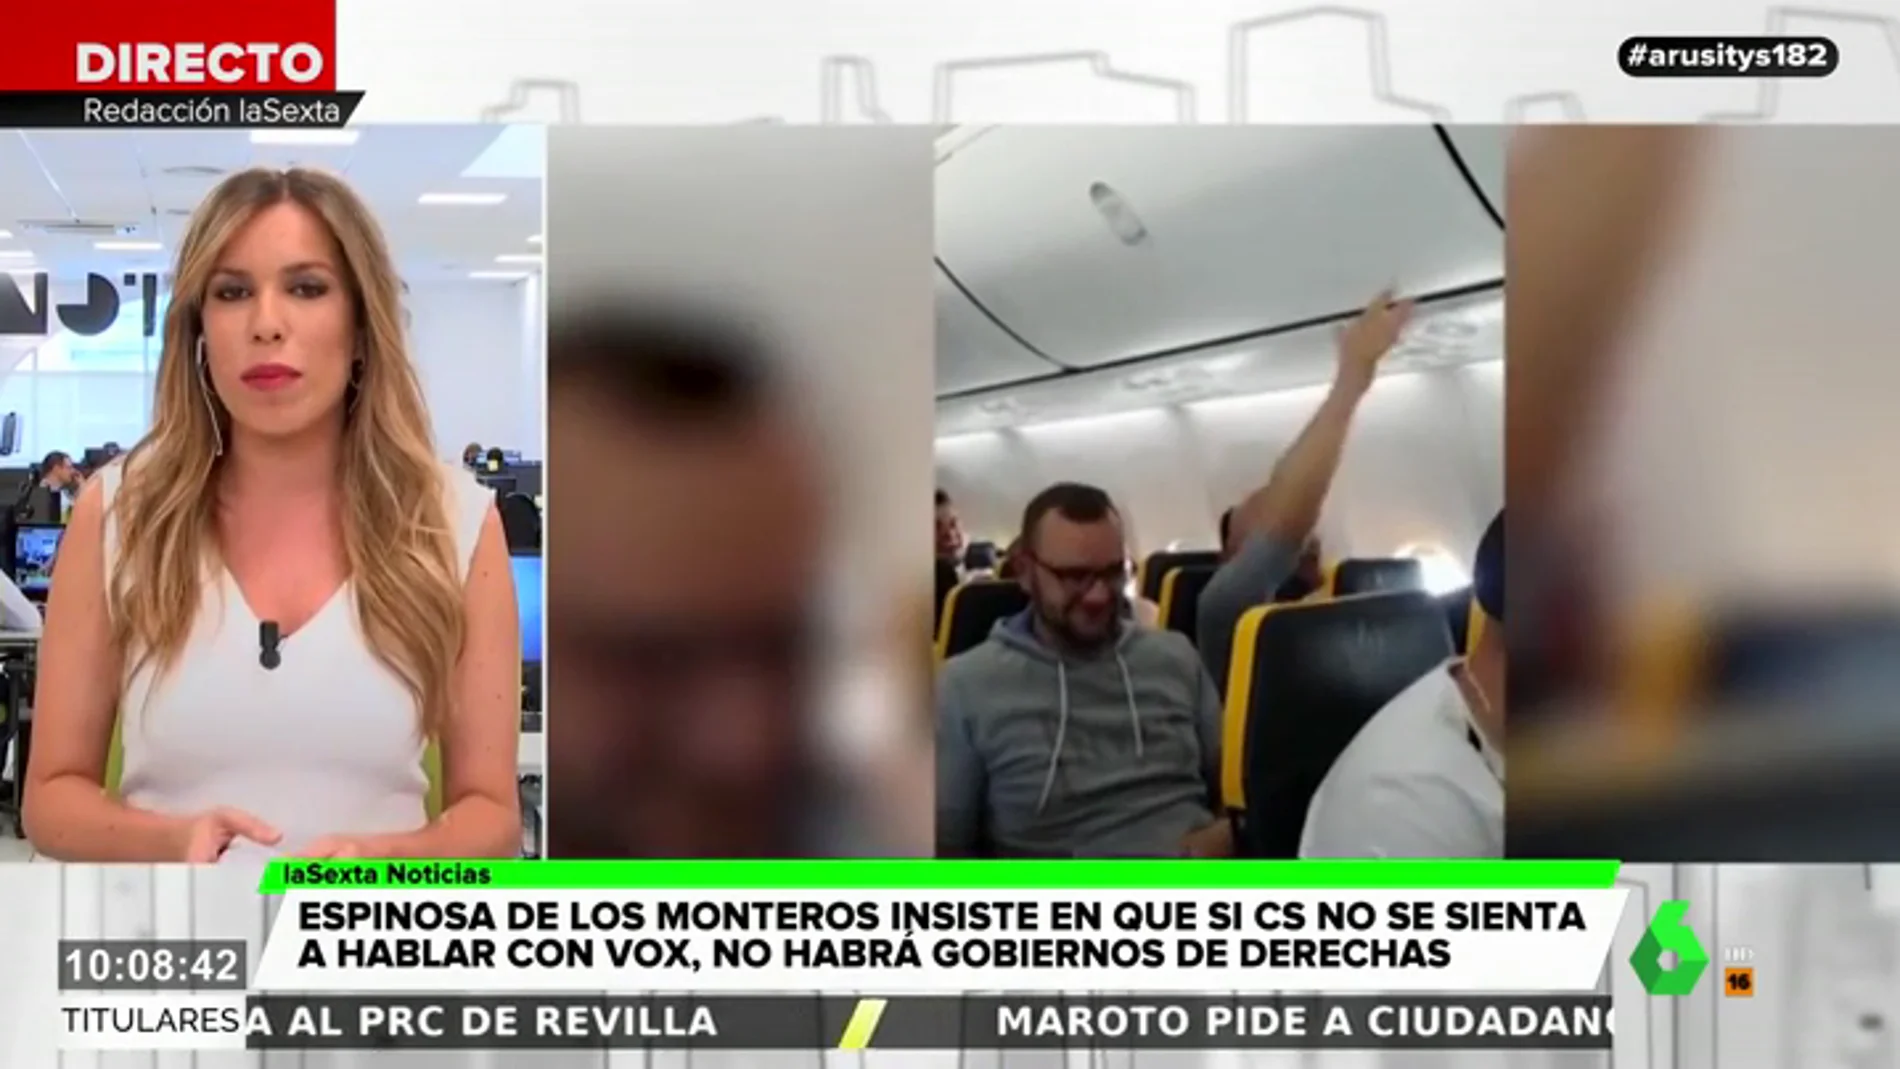 Un grupo de pasajeros alemanes corea cánticos nazis y racistas en un vuelo hacia Palma de Mallorca